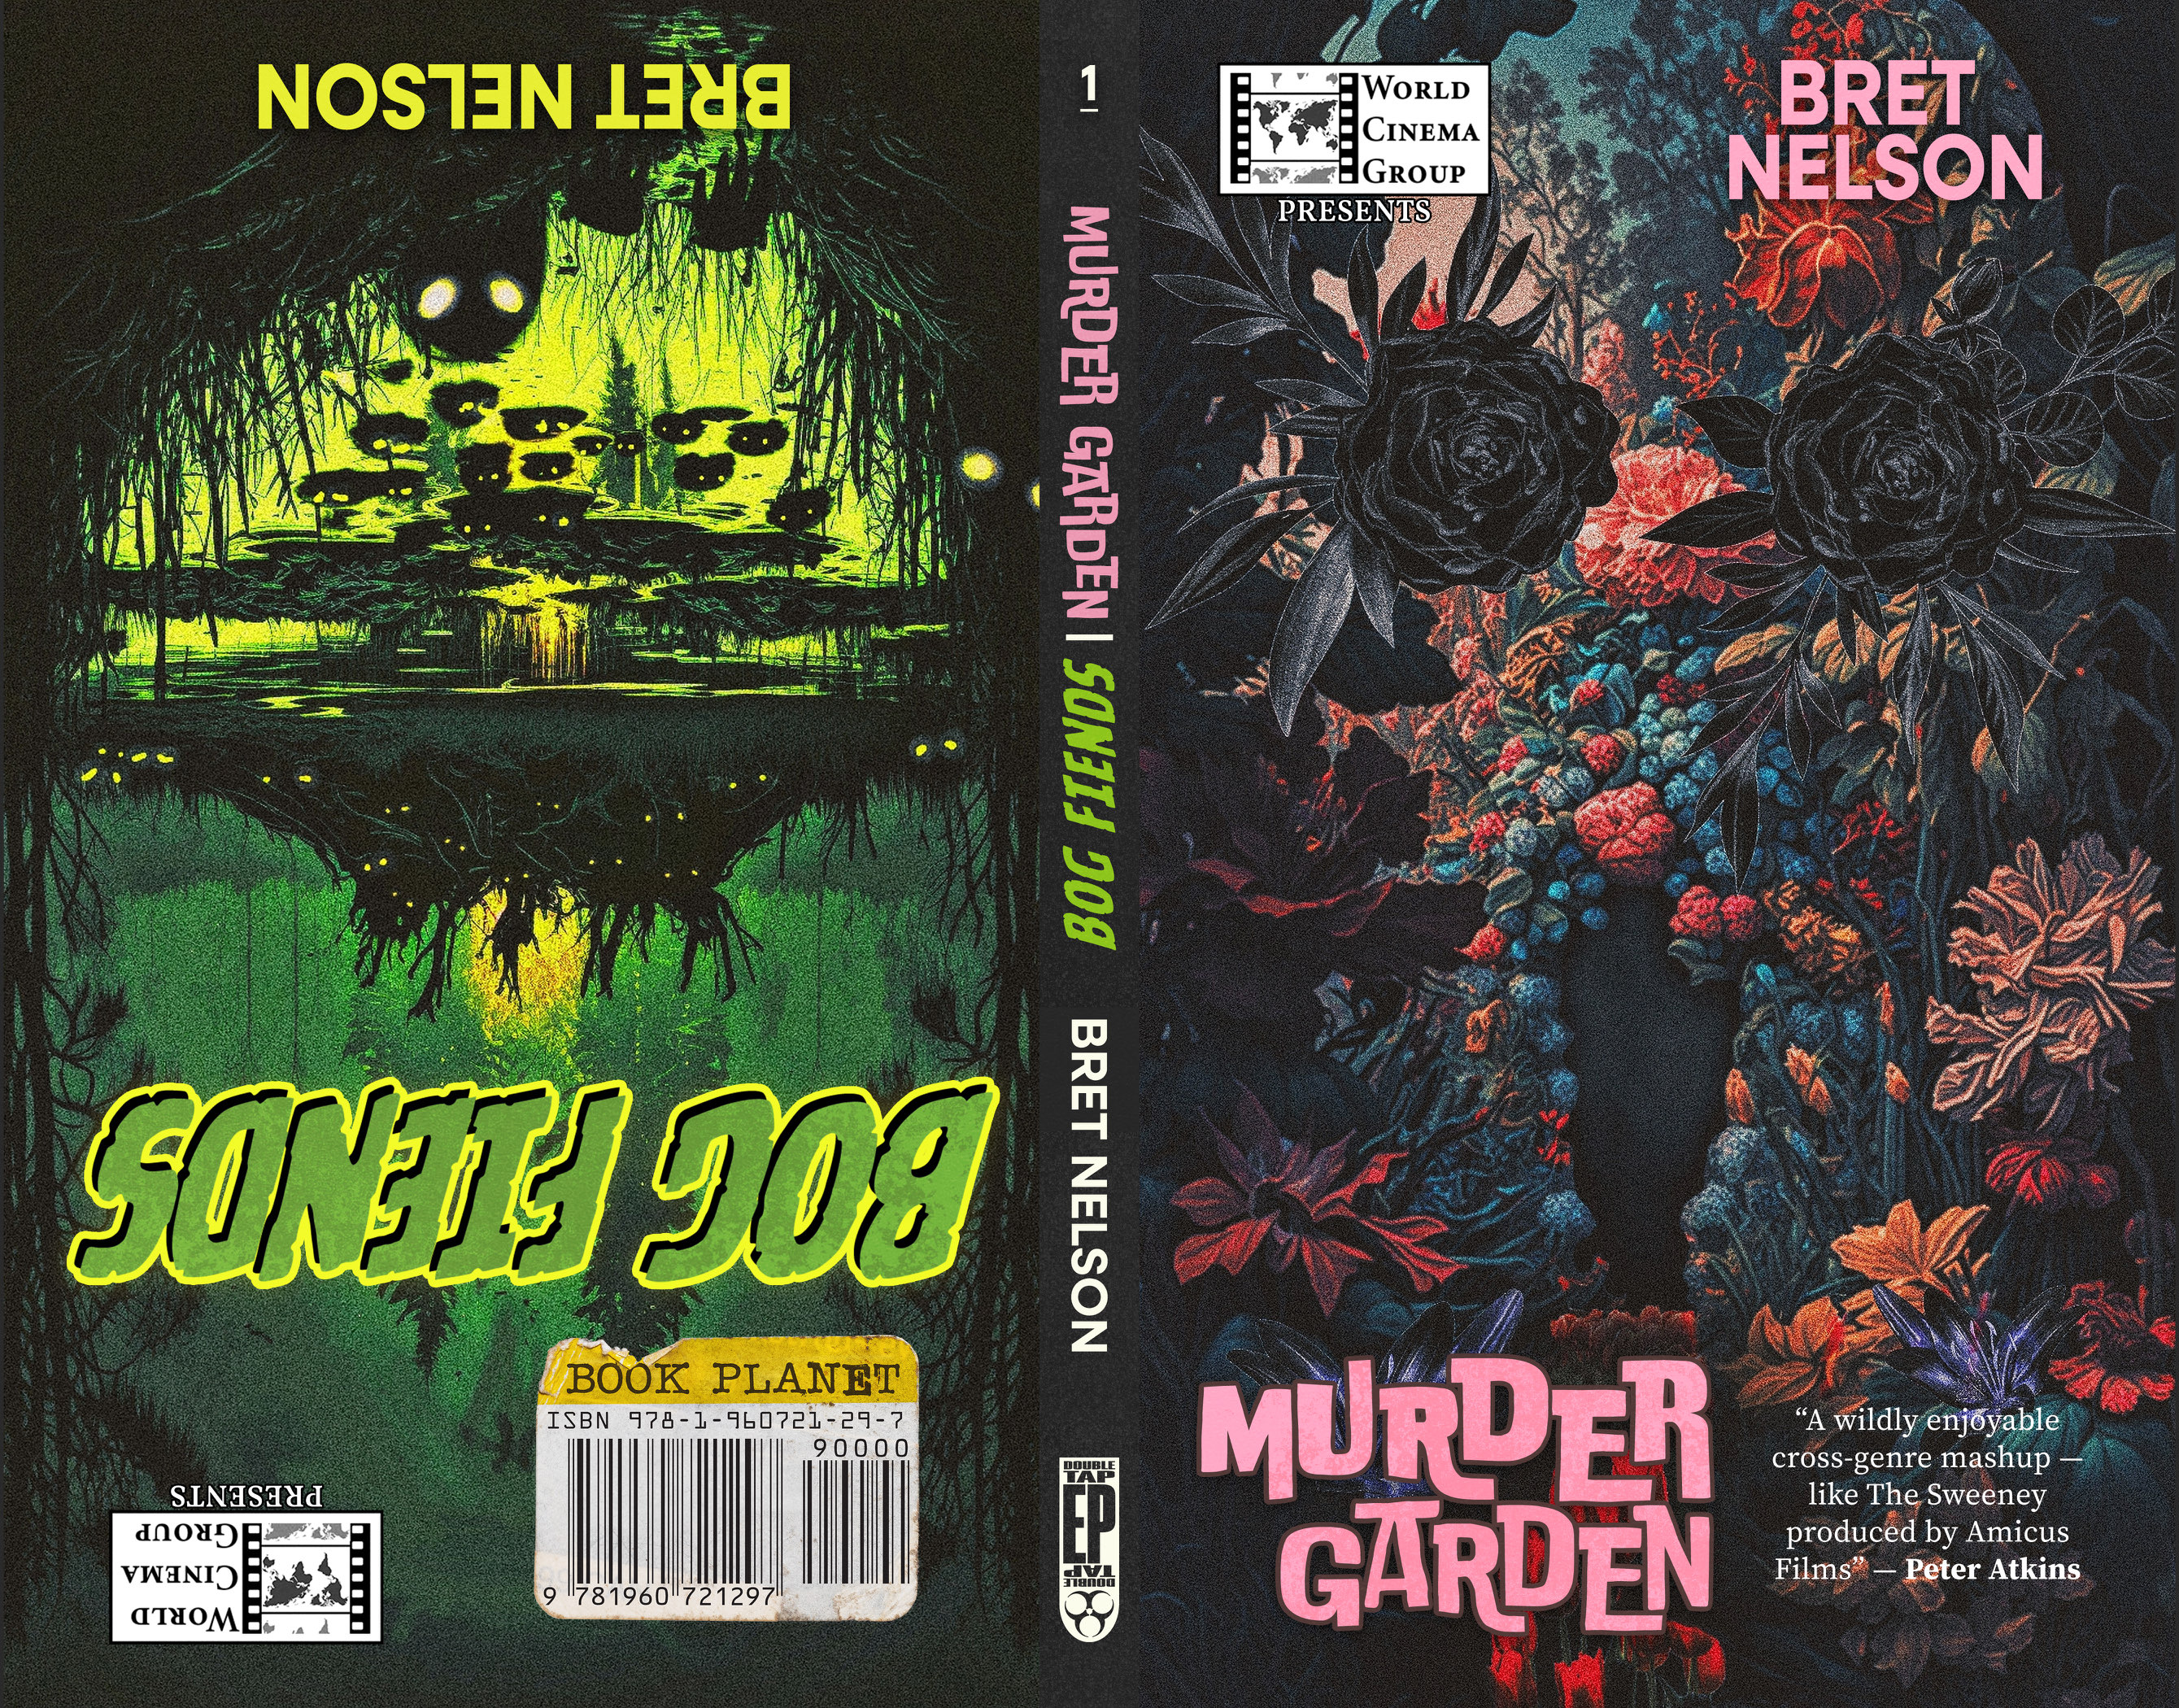 Murder Garden / Bog Fiends: An Encyclopocalypse Double Tap Bret  Nelson Book Cover